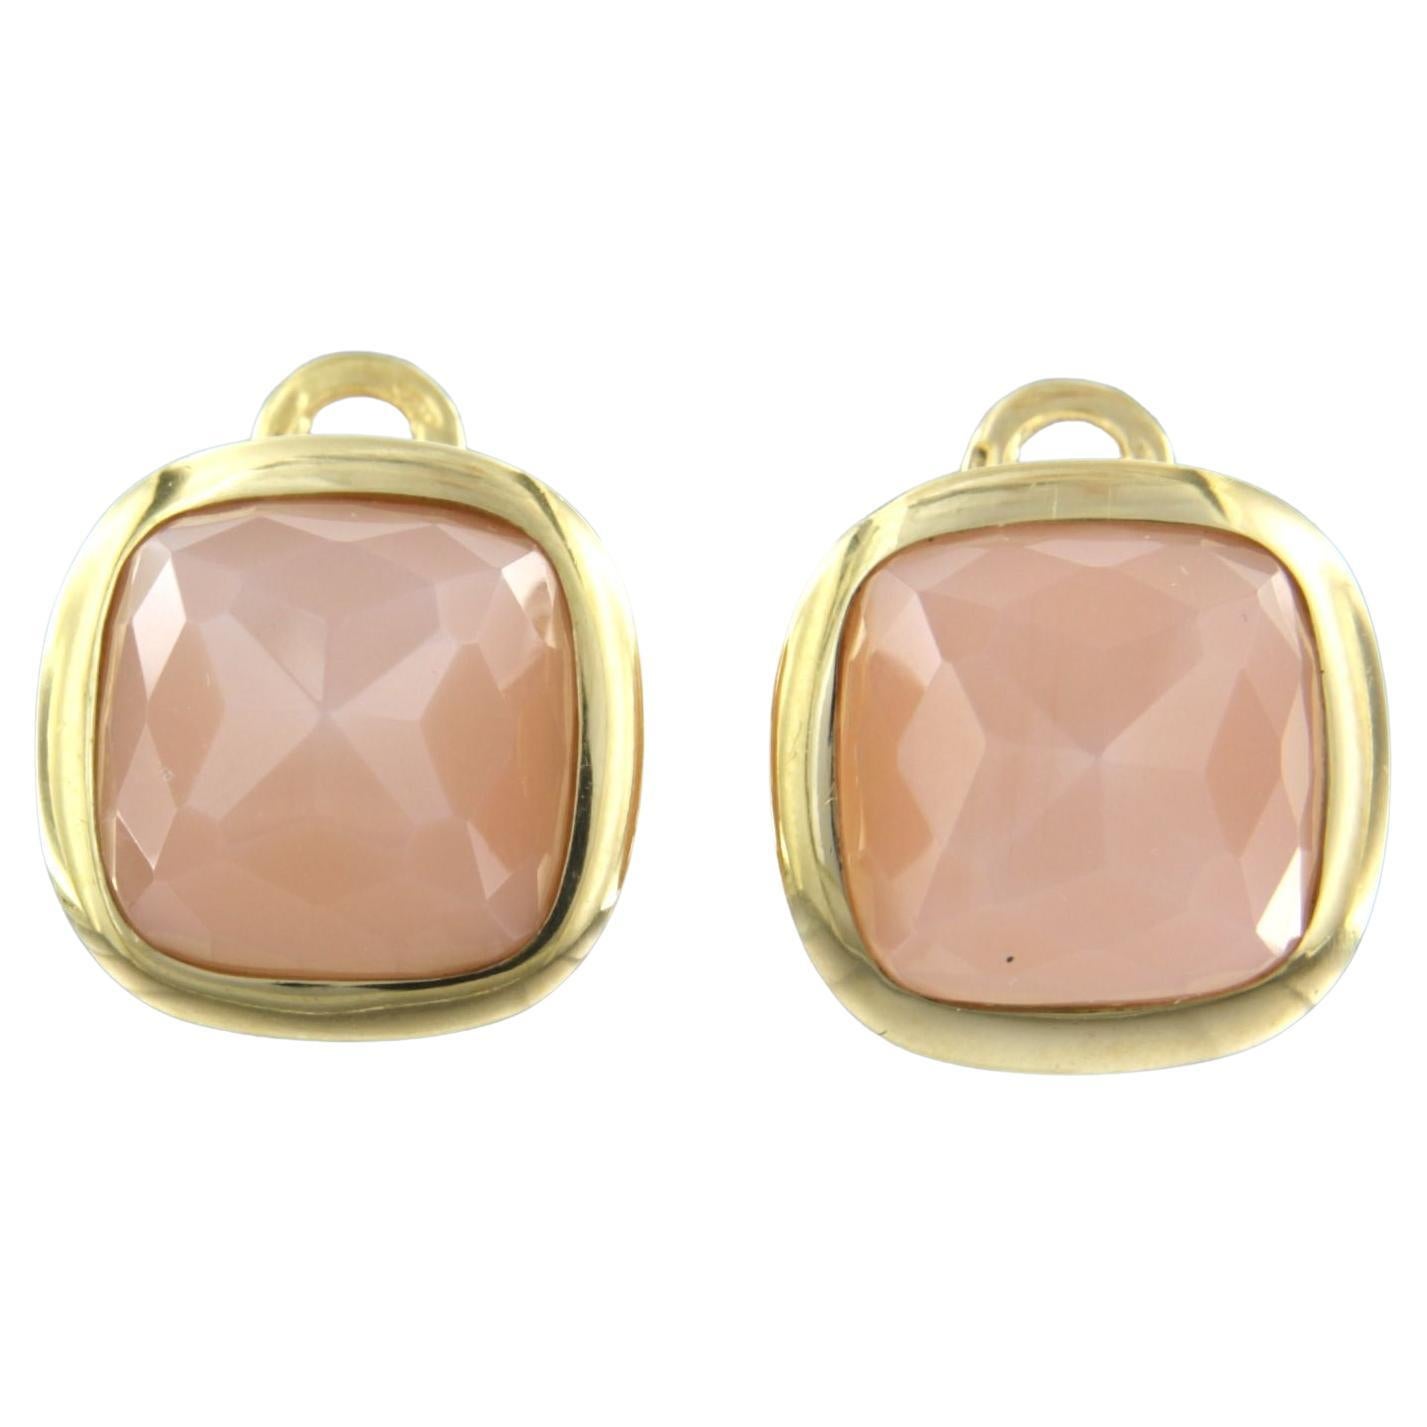 18k yellow gold ear clips set with pink quartz - size 1.8 cm x 1.8 cm For Sale